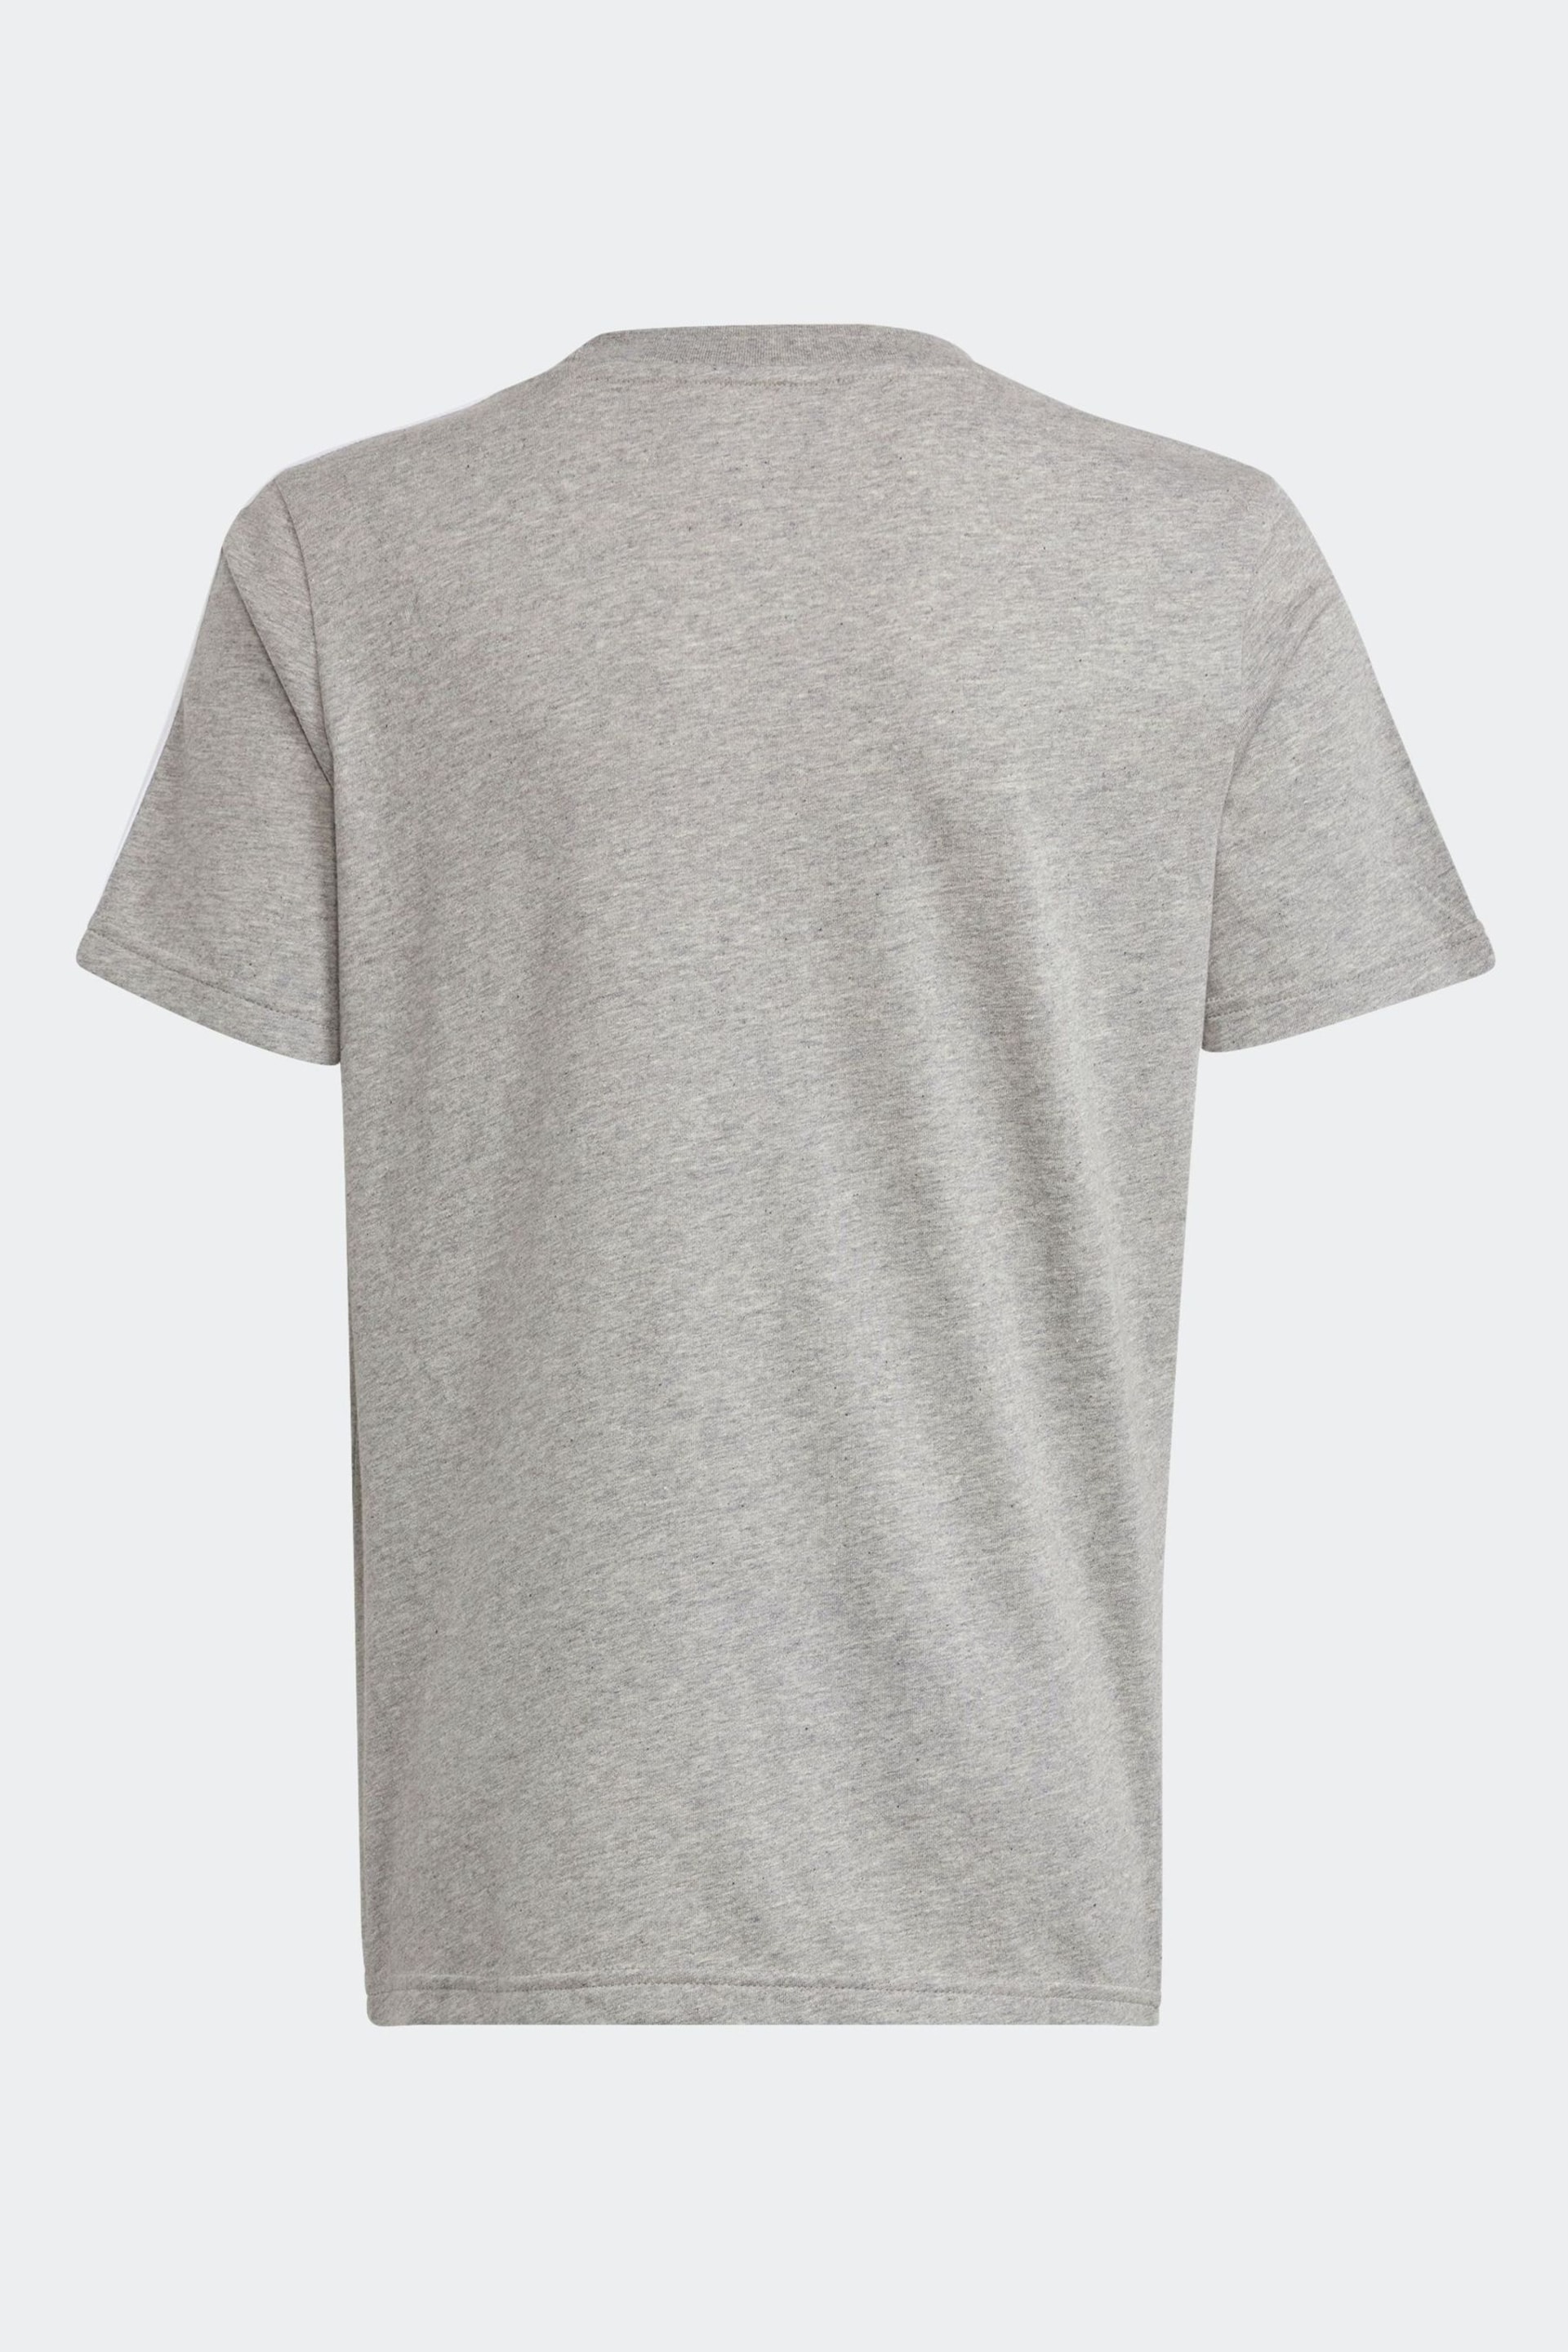 adidas Grey Essentials 3-Stripes Cotton T-Shirt - Image 2 of 5